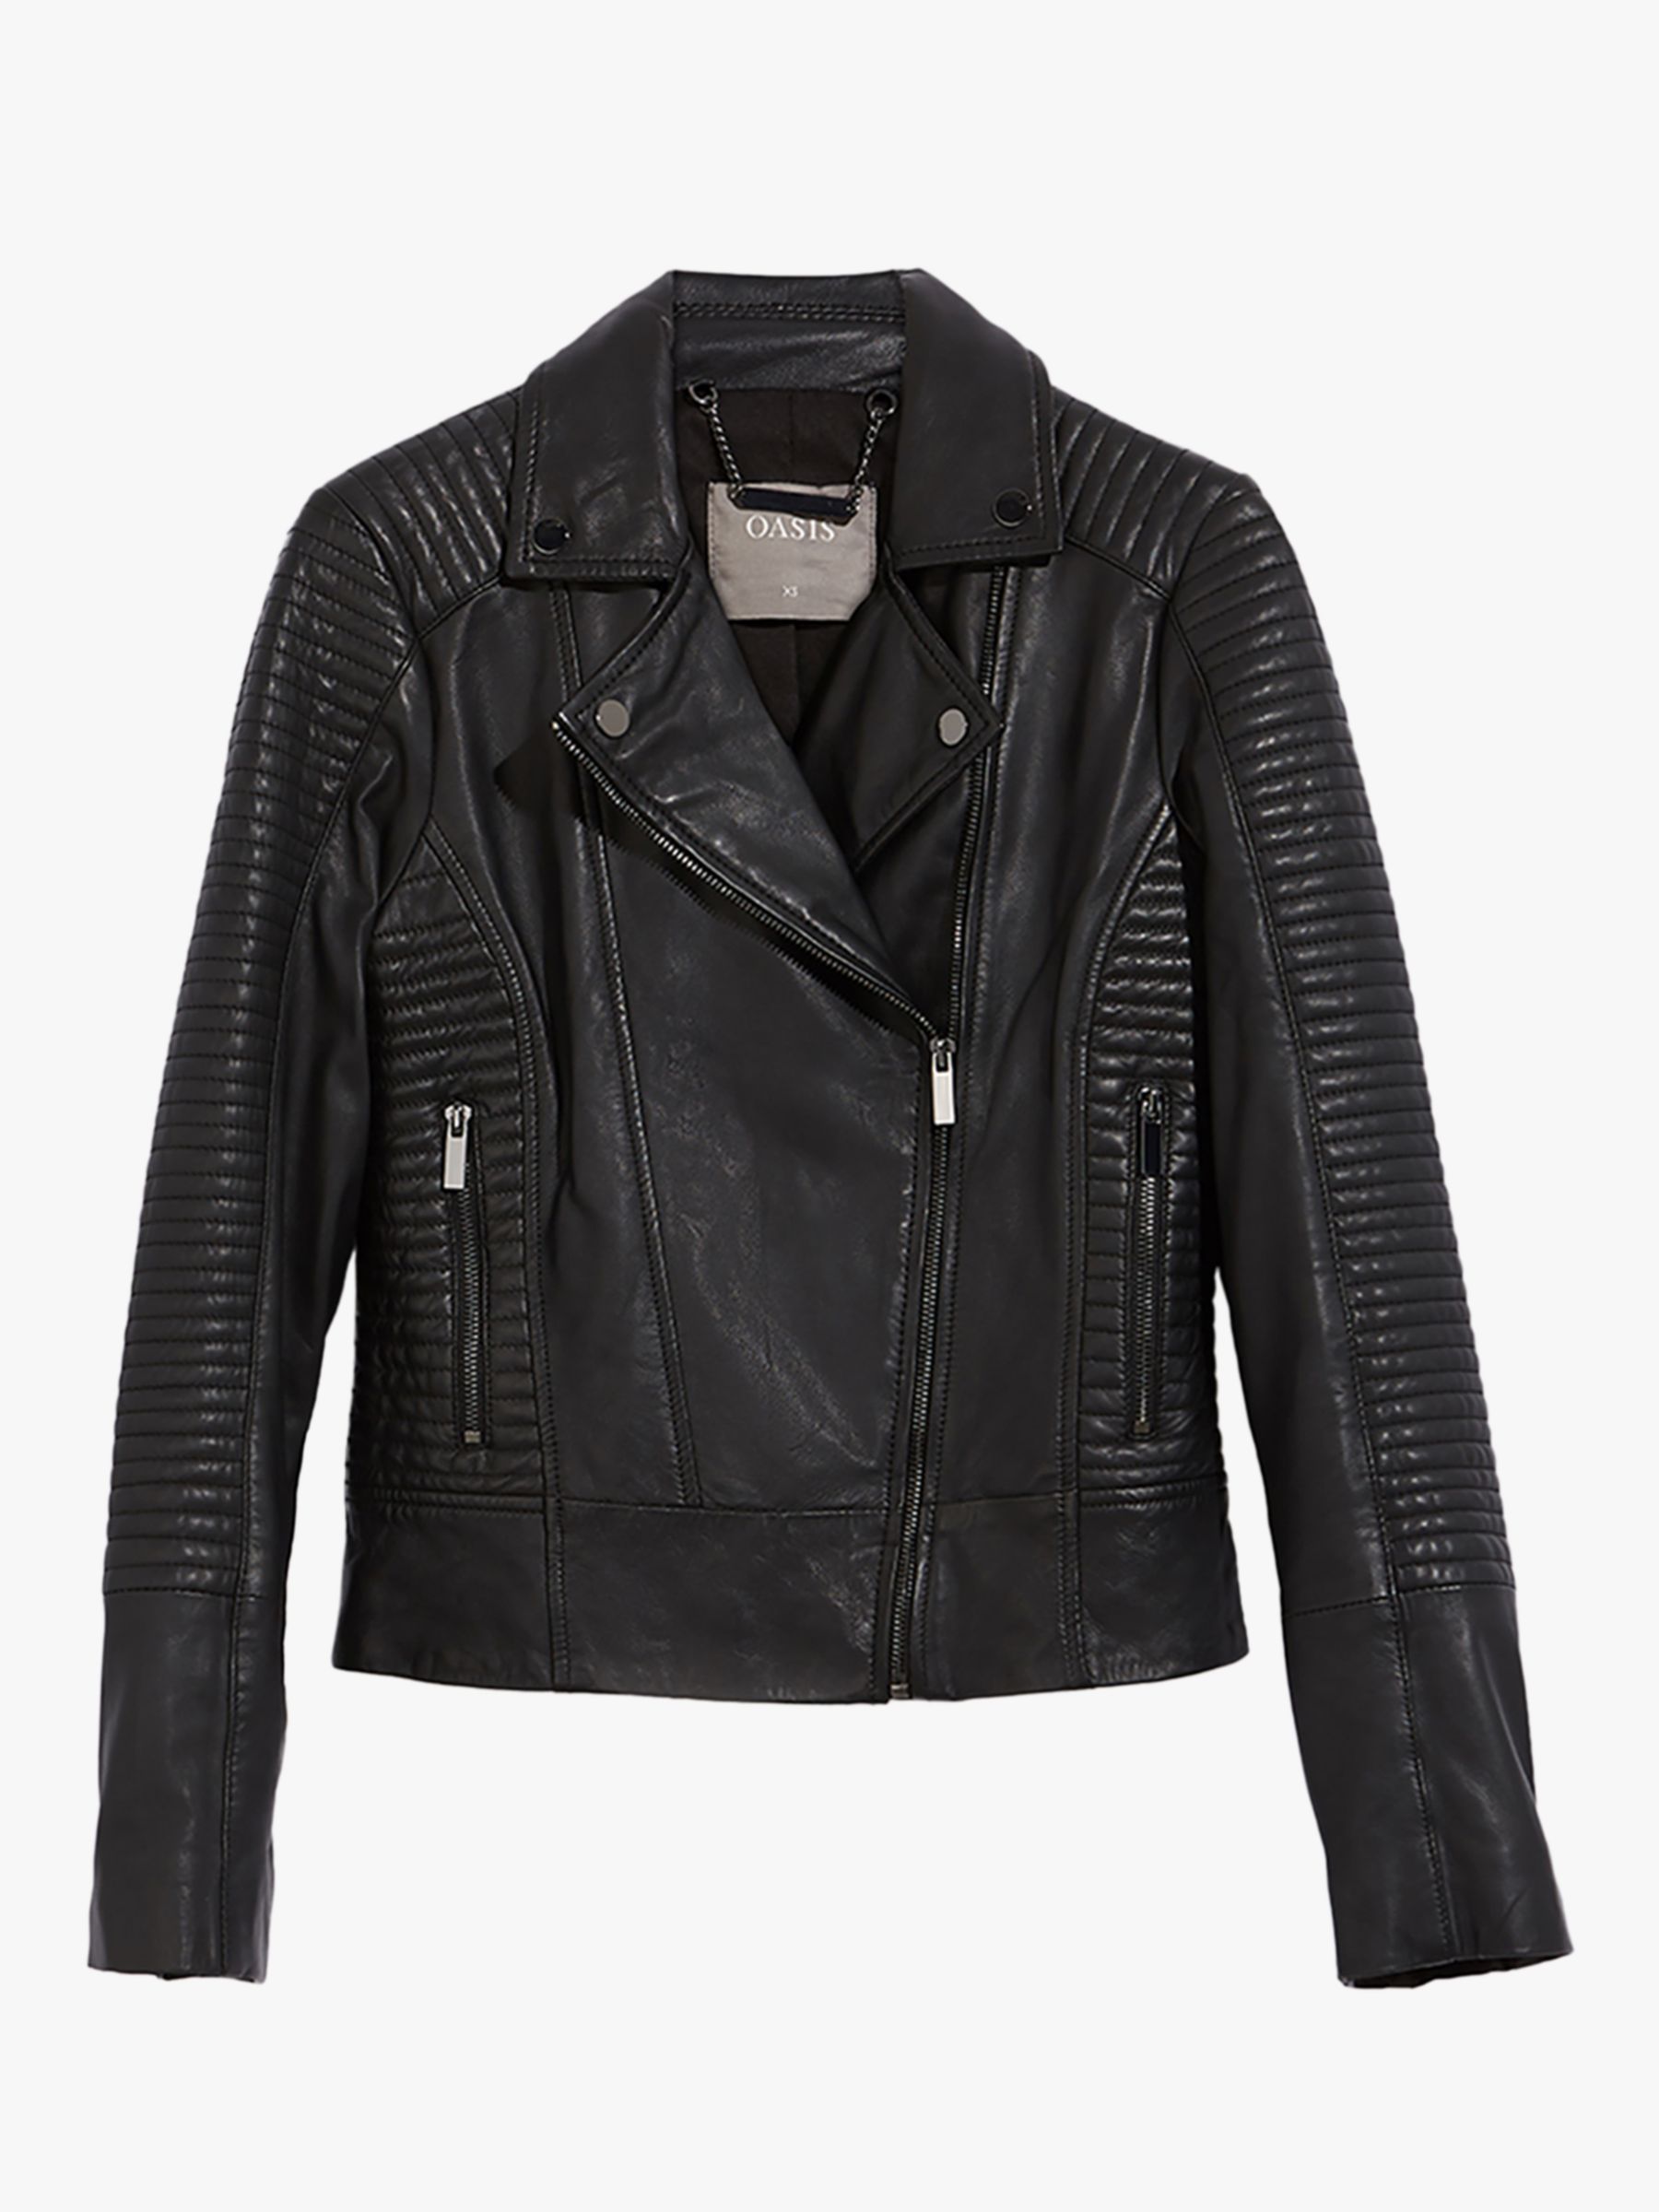 Oasis Leather Stitch Biker Jacket, Black